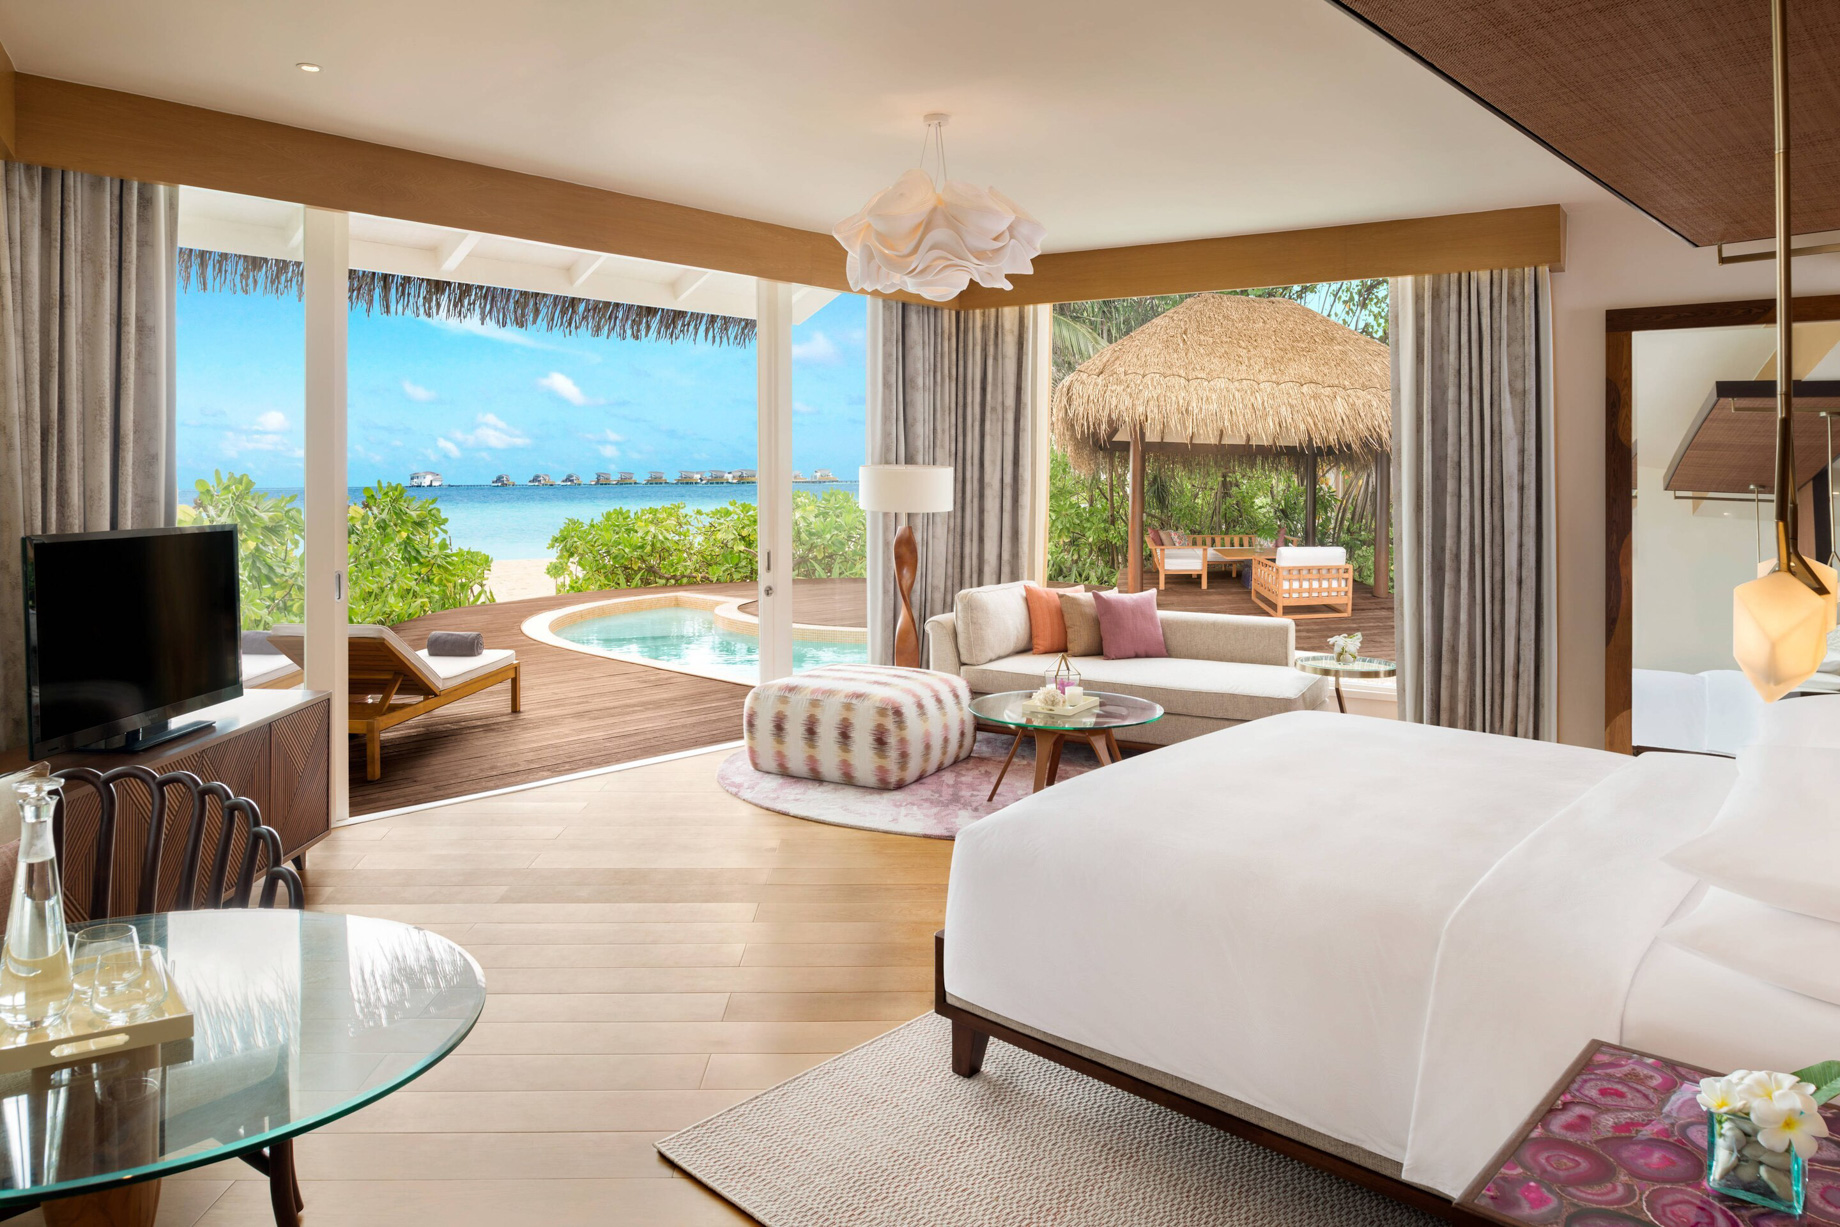 JW Marriott Maldives Resort & Spa – Shaviyani Atoll, Maldives – Duplex Beach Pool Villa Bedroom